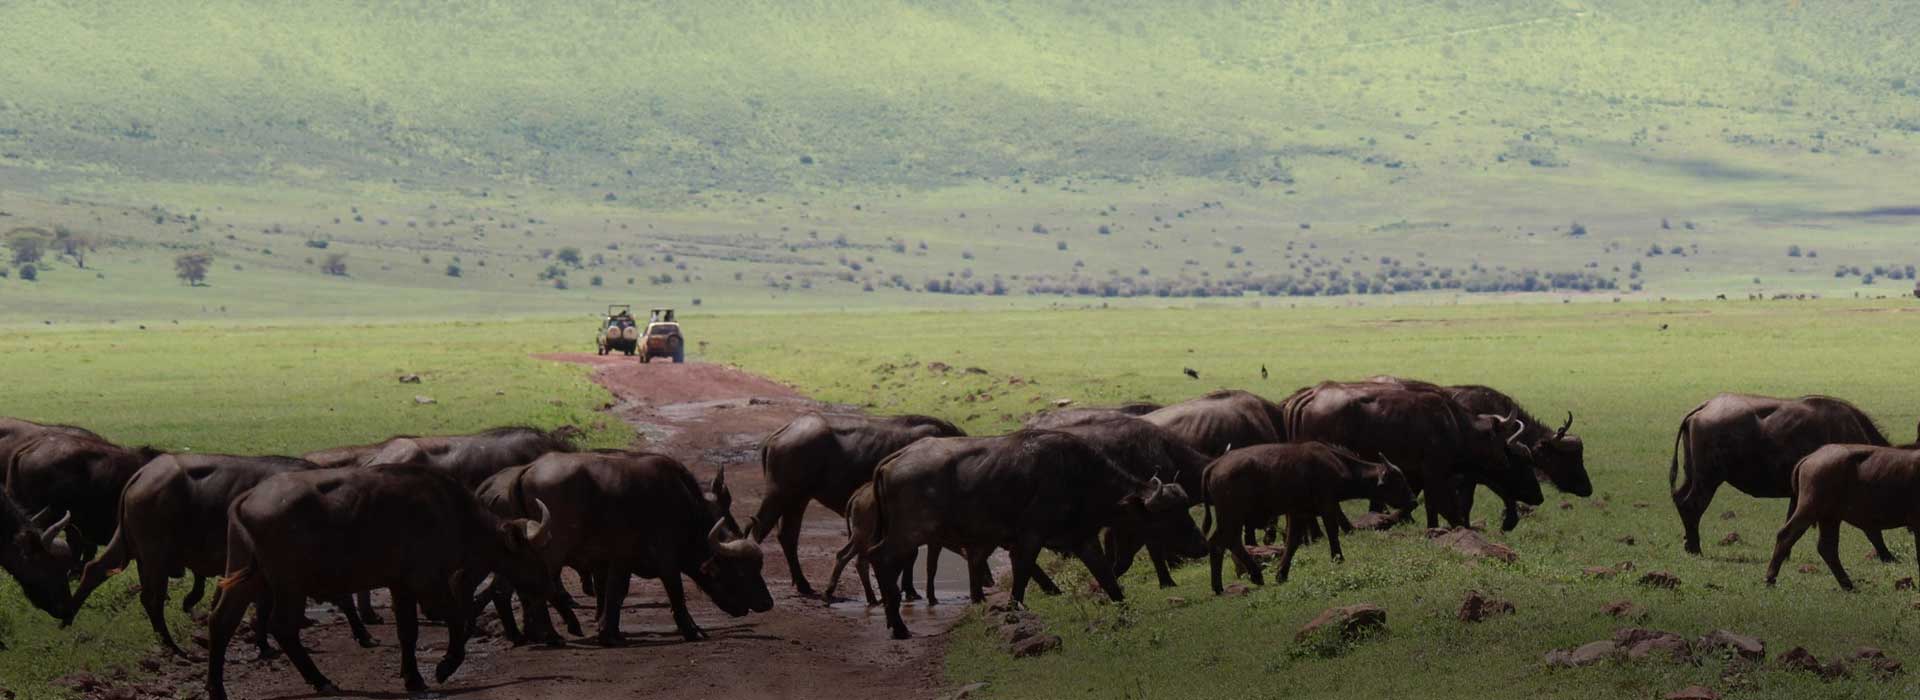 Ngorongoro Crater Day Trip Tour